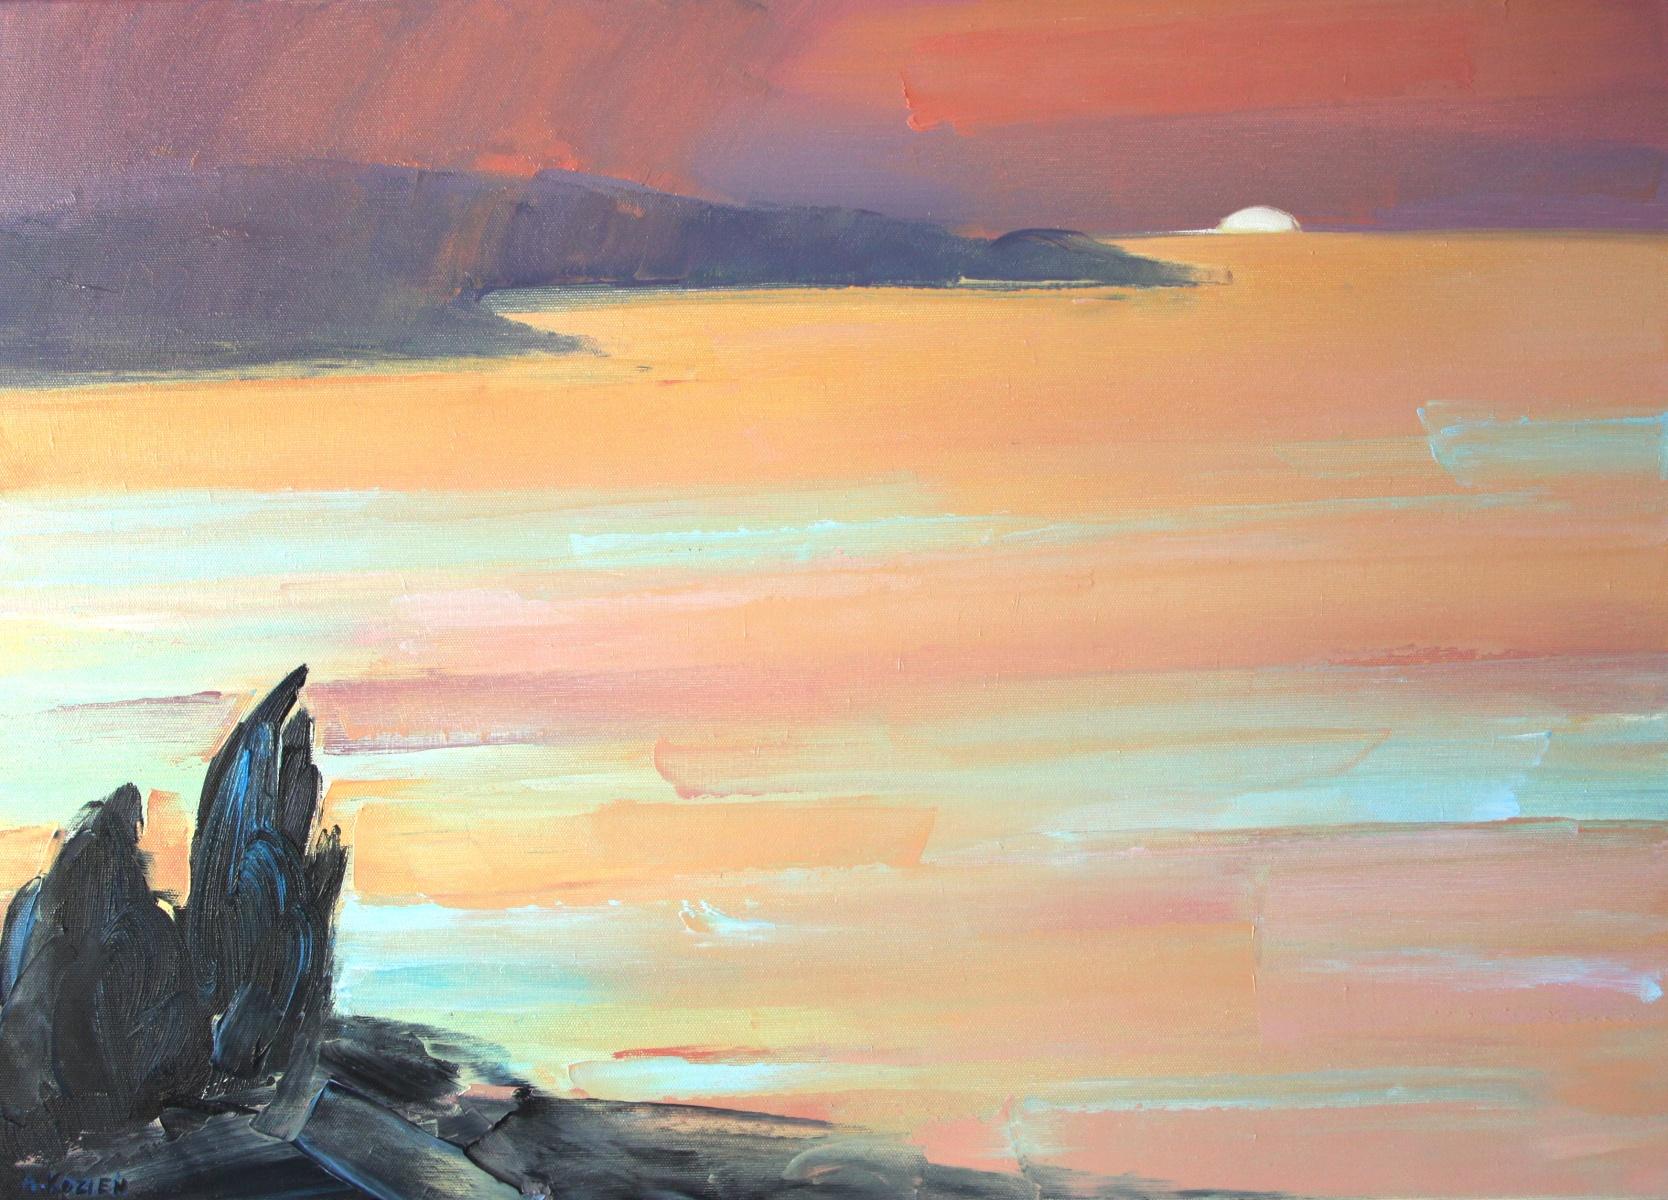 Agnieszka Kozień Landscape Painting - Island 24 - Painting, Oil on canvas, Blue Seascape, Contemporary Polish Artist